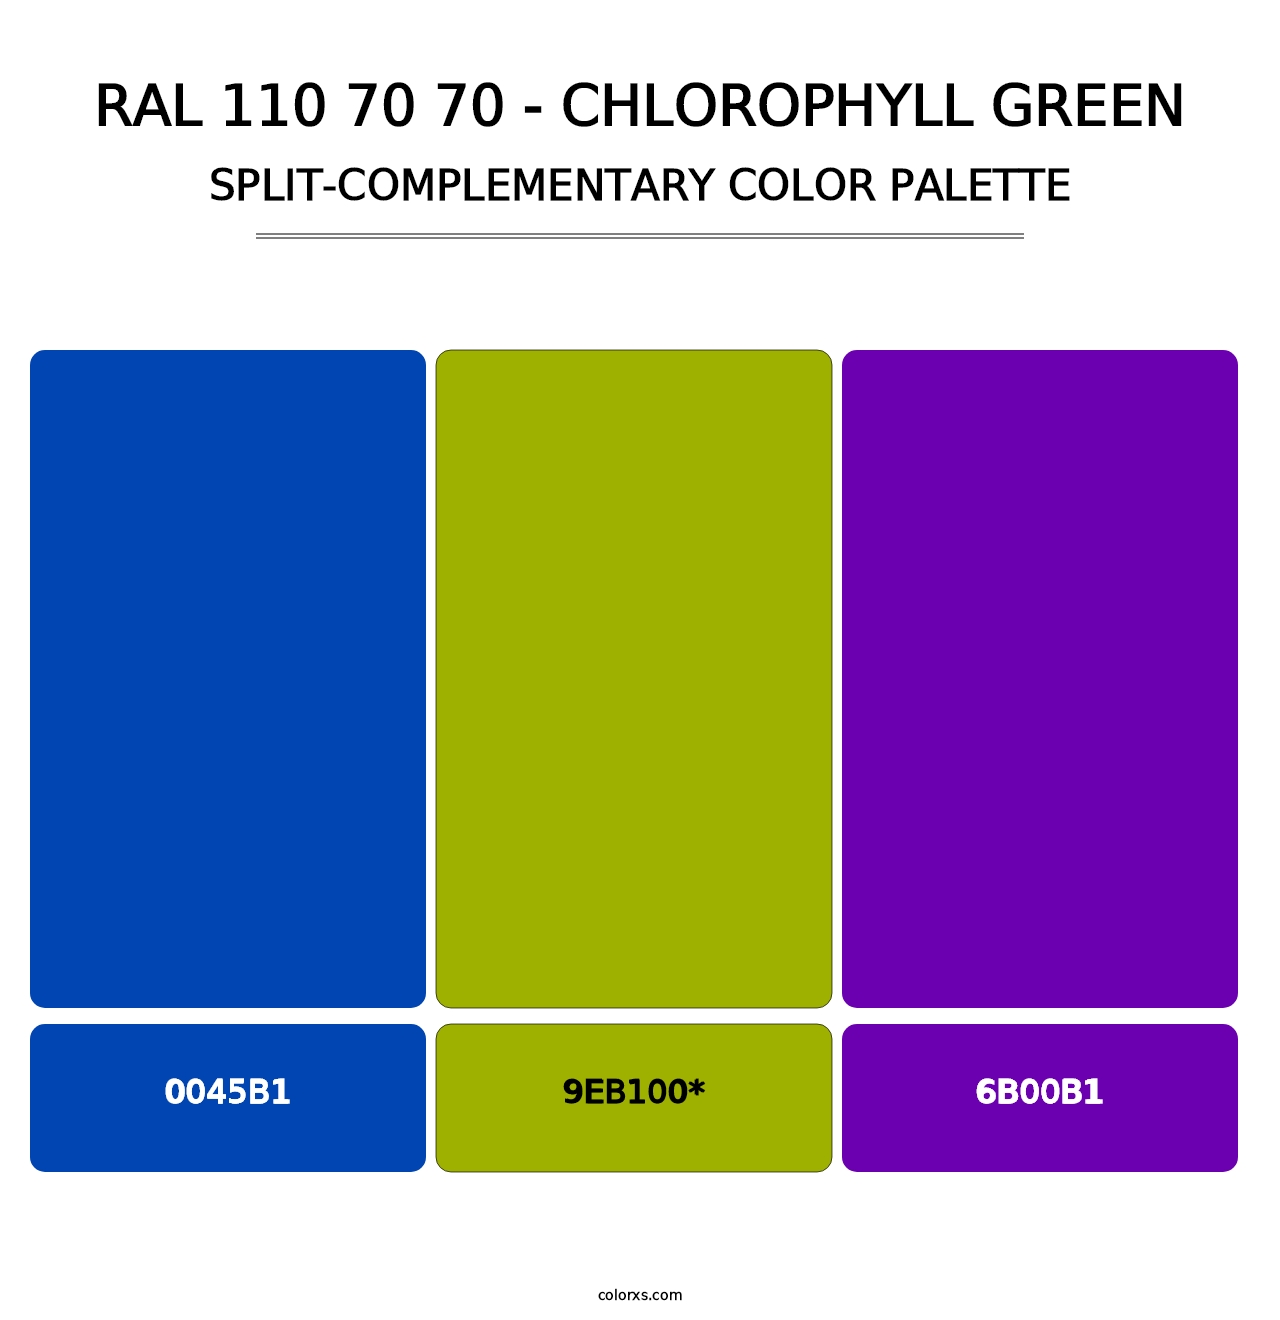 RAL 110 70 70 - Chlorophyll Green - Split-Complementary Color Palette